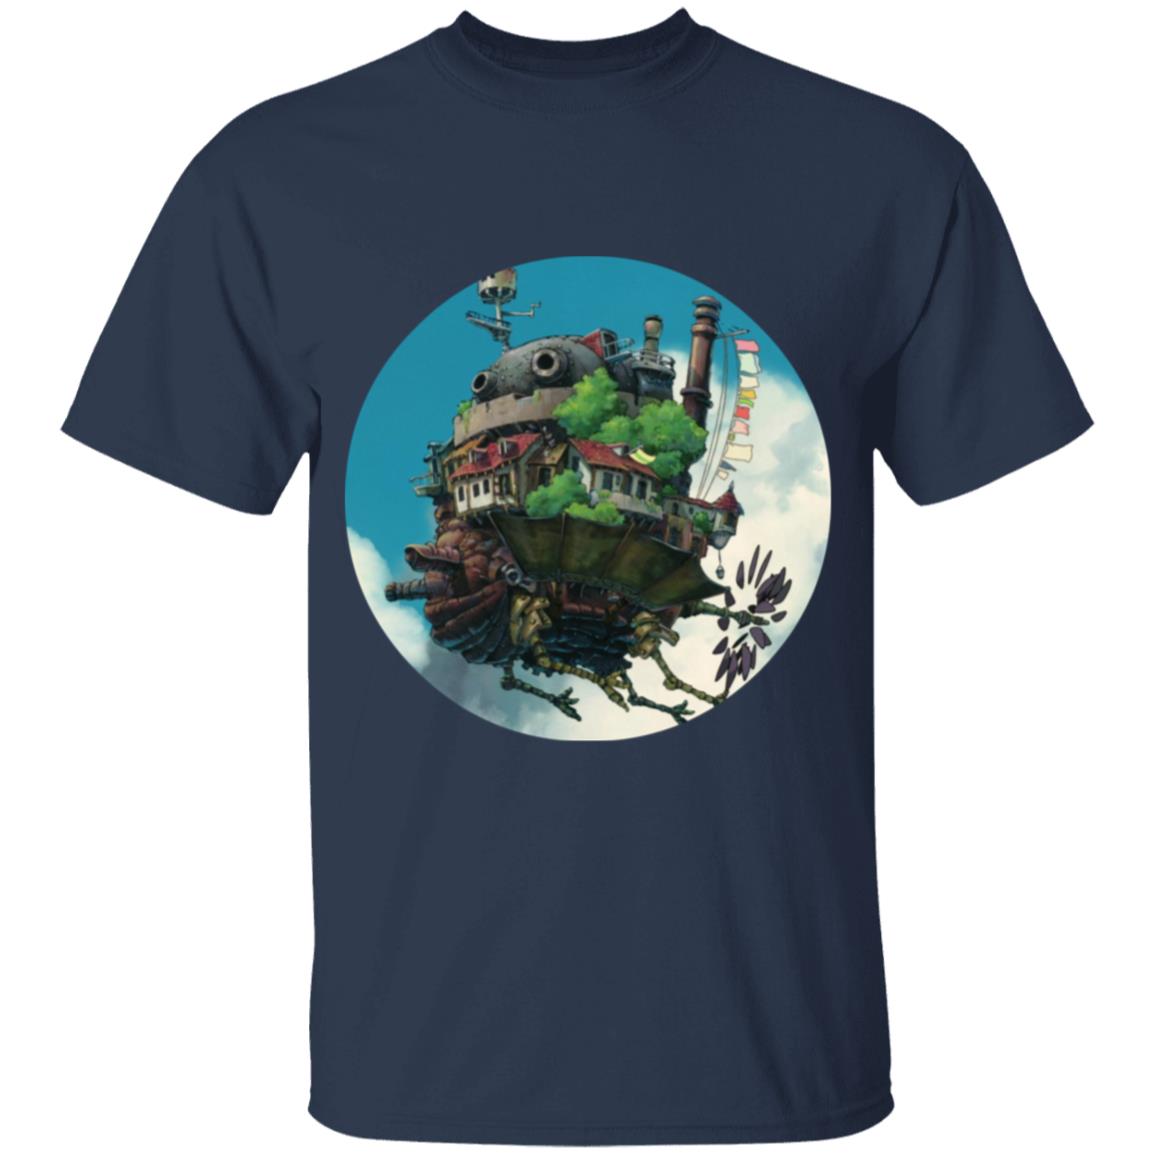 Howl’s Moving Castle – Flying on the Sky Kid T Shirt